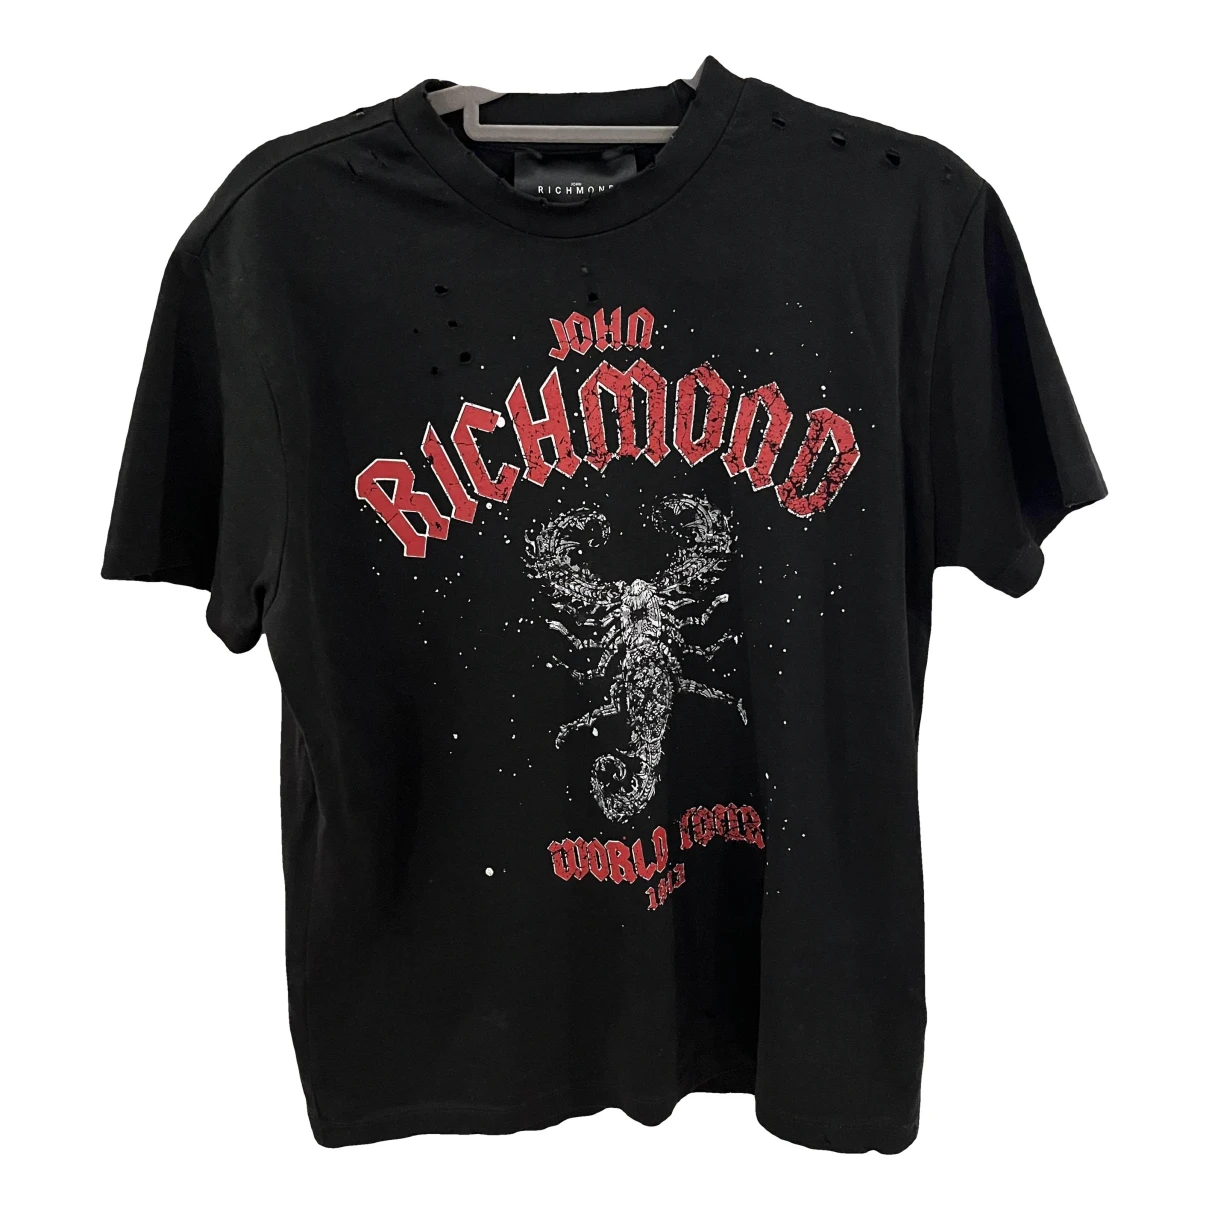 Pre-owned John Richmond T-shirt In Black